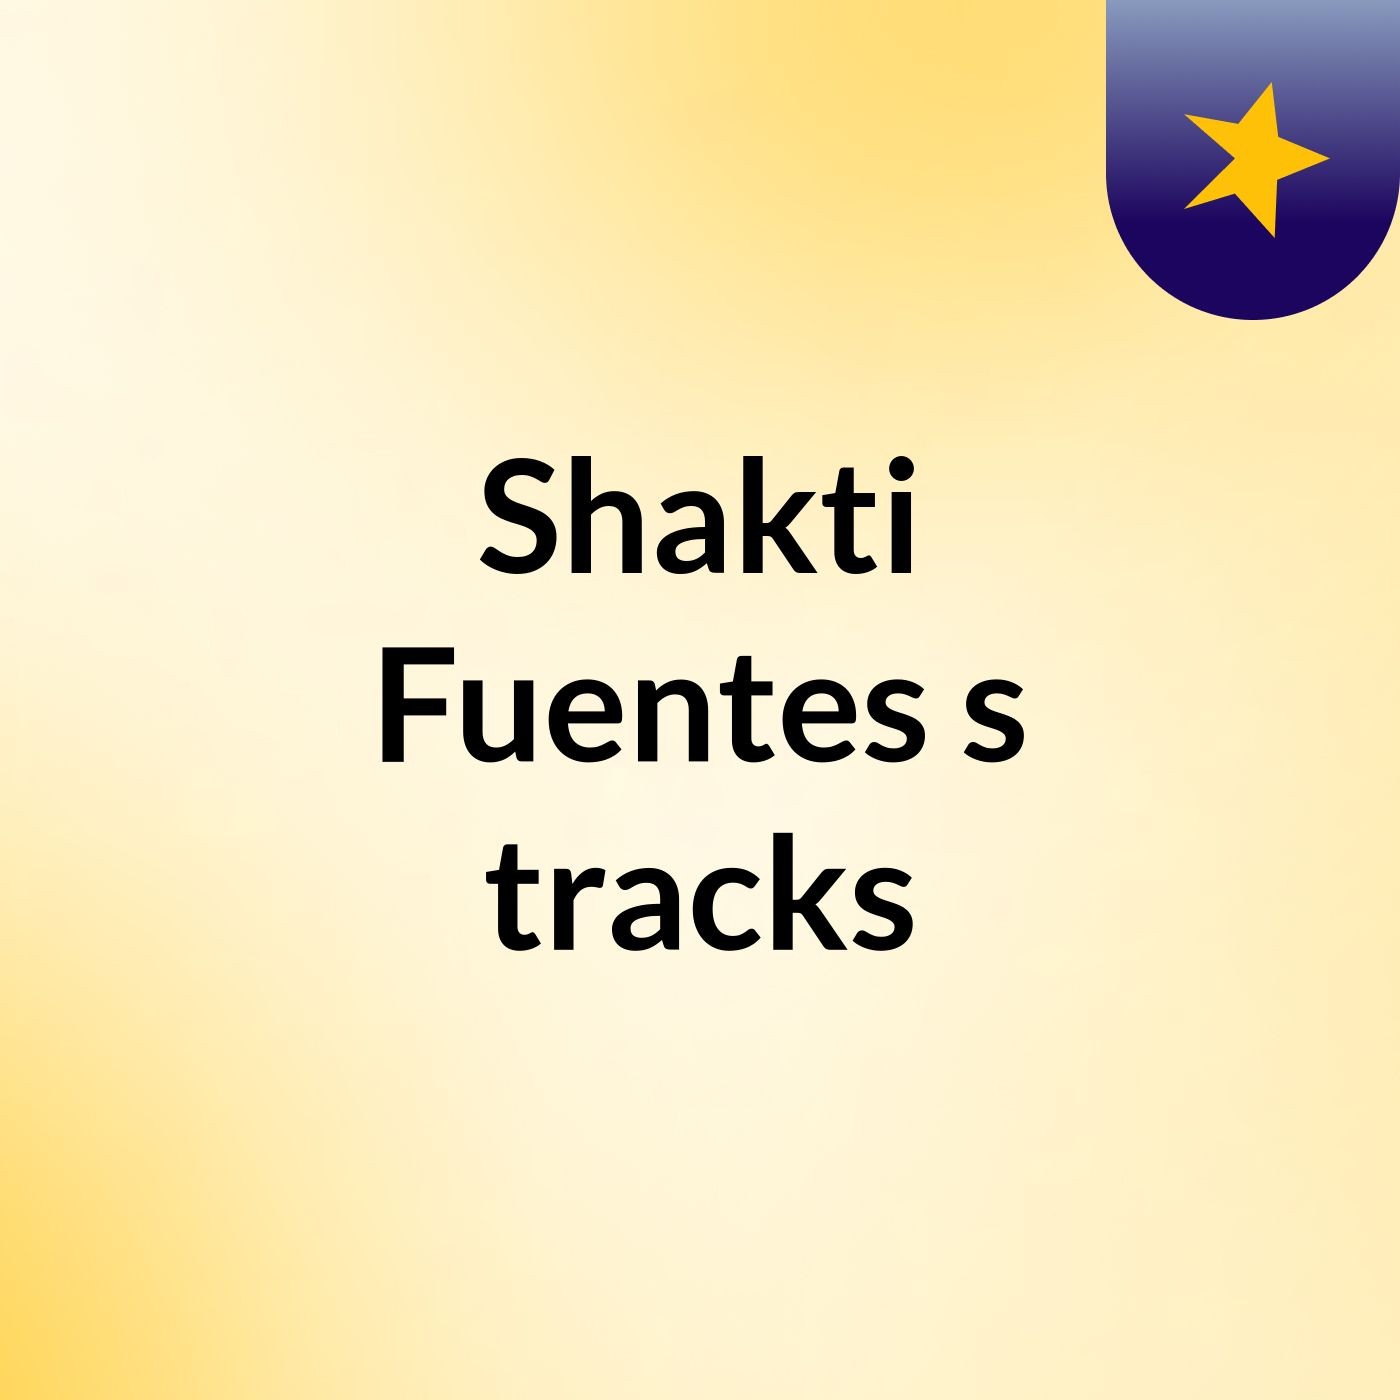 Shakti Fuentes's tracks